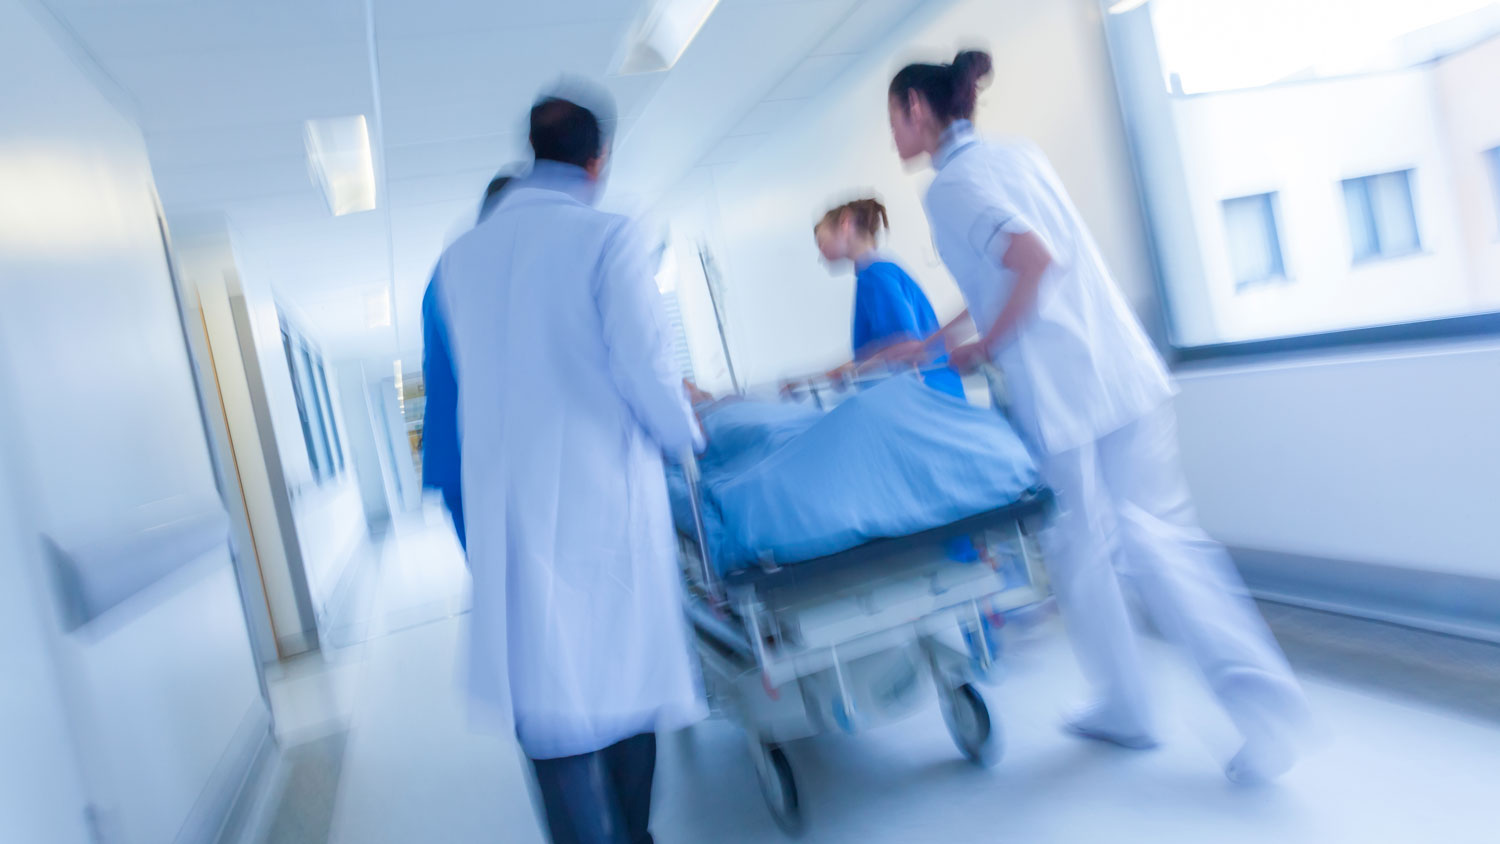 A gurney being wheeled down a hospital corridor